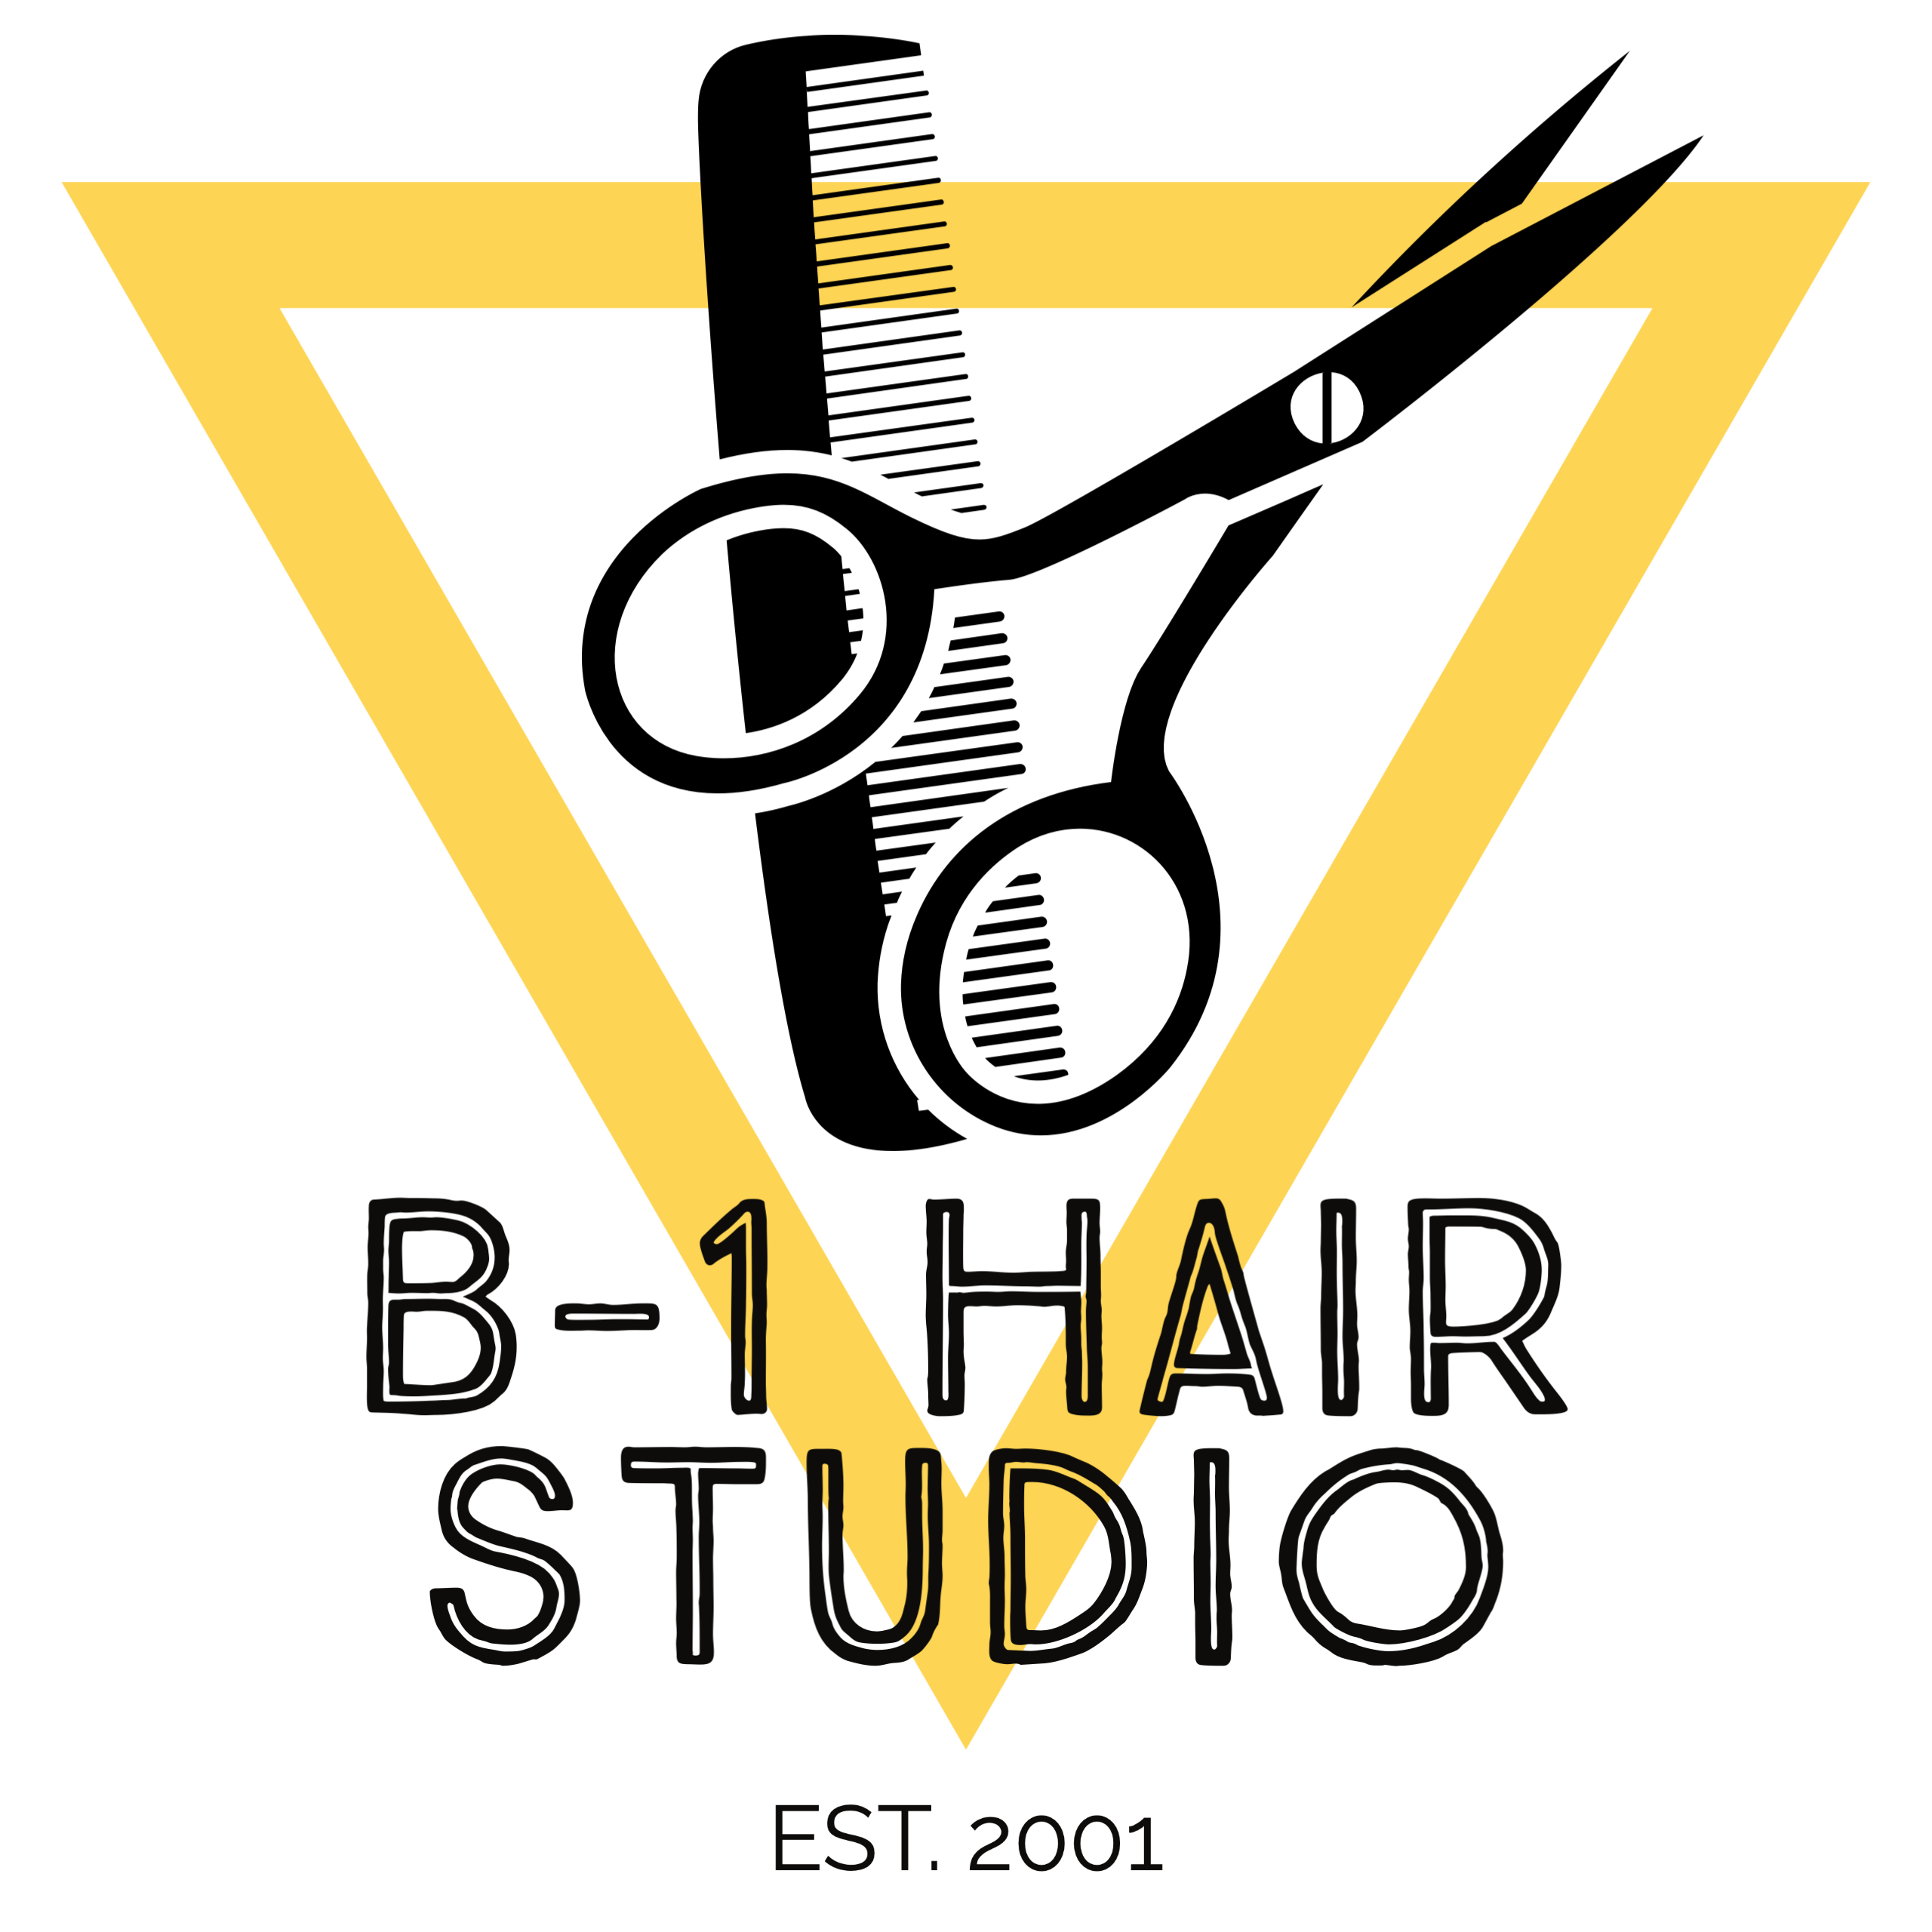 B-1 Hair Studio